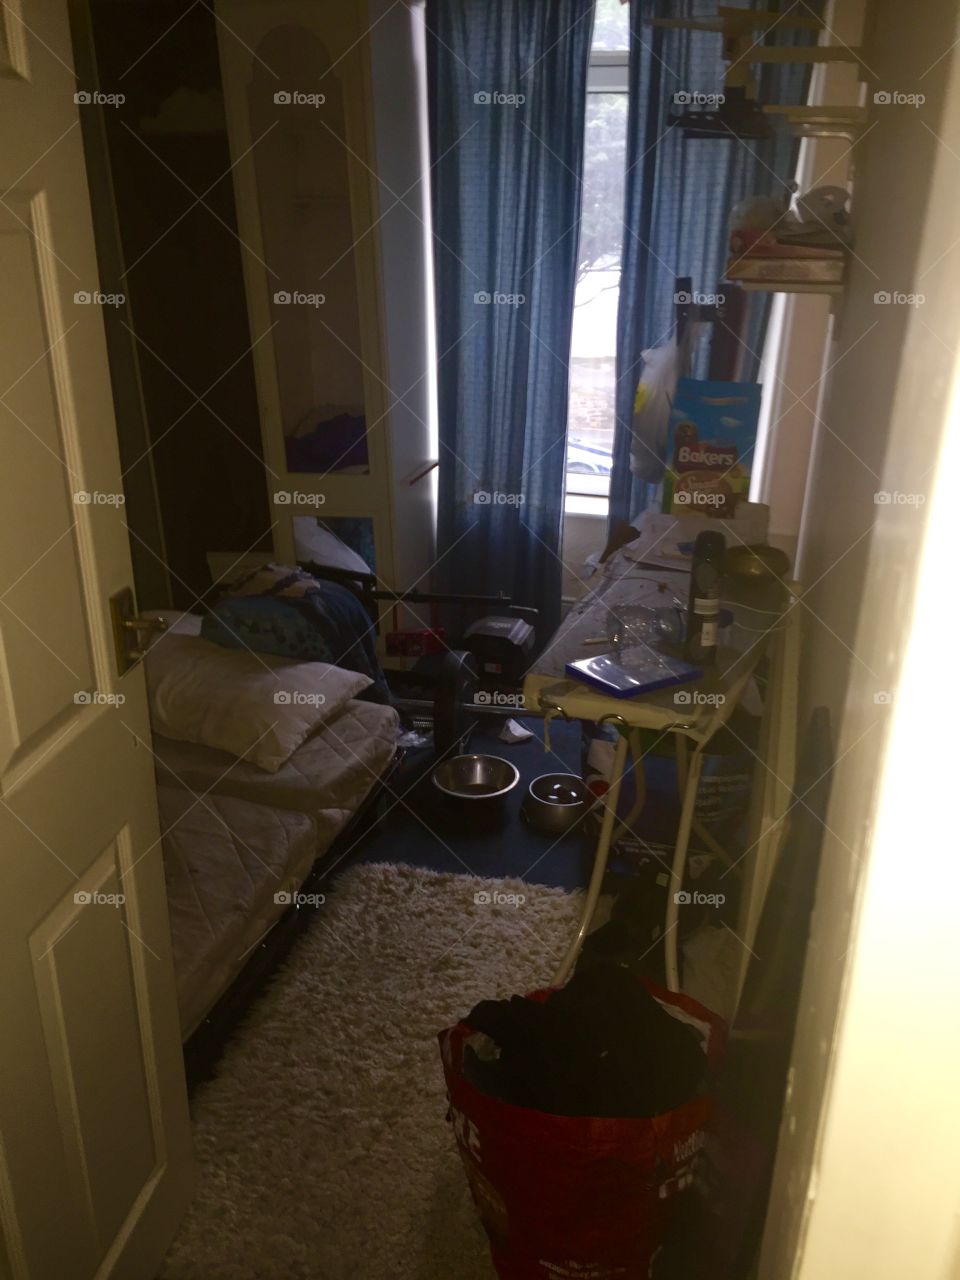 Untidy bedroom, not everyone's a clean freak. 